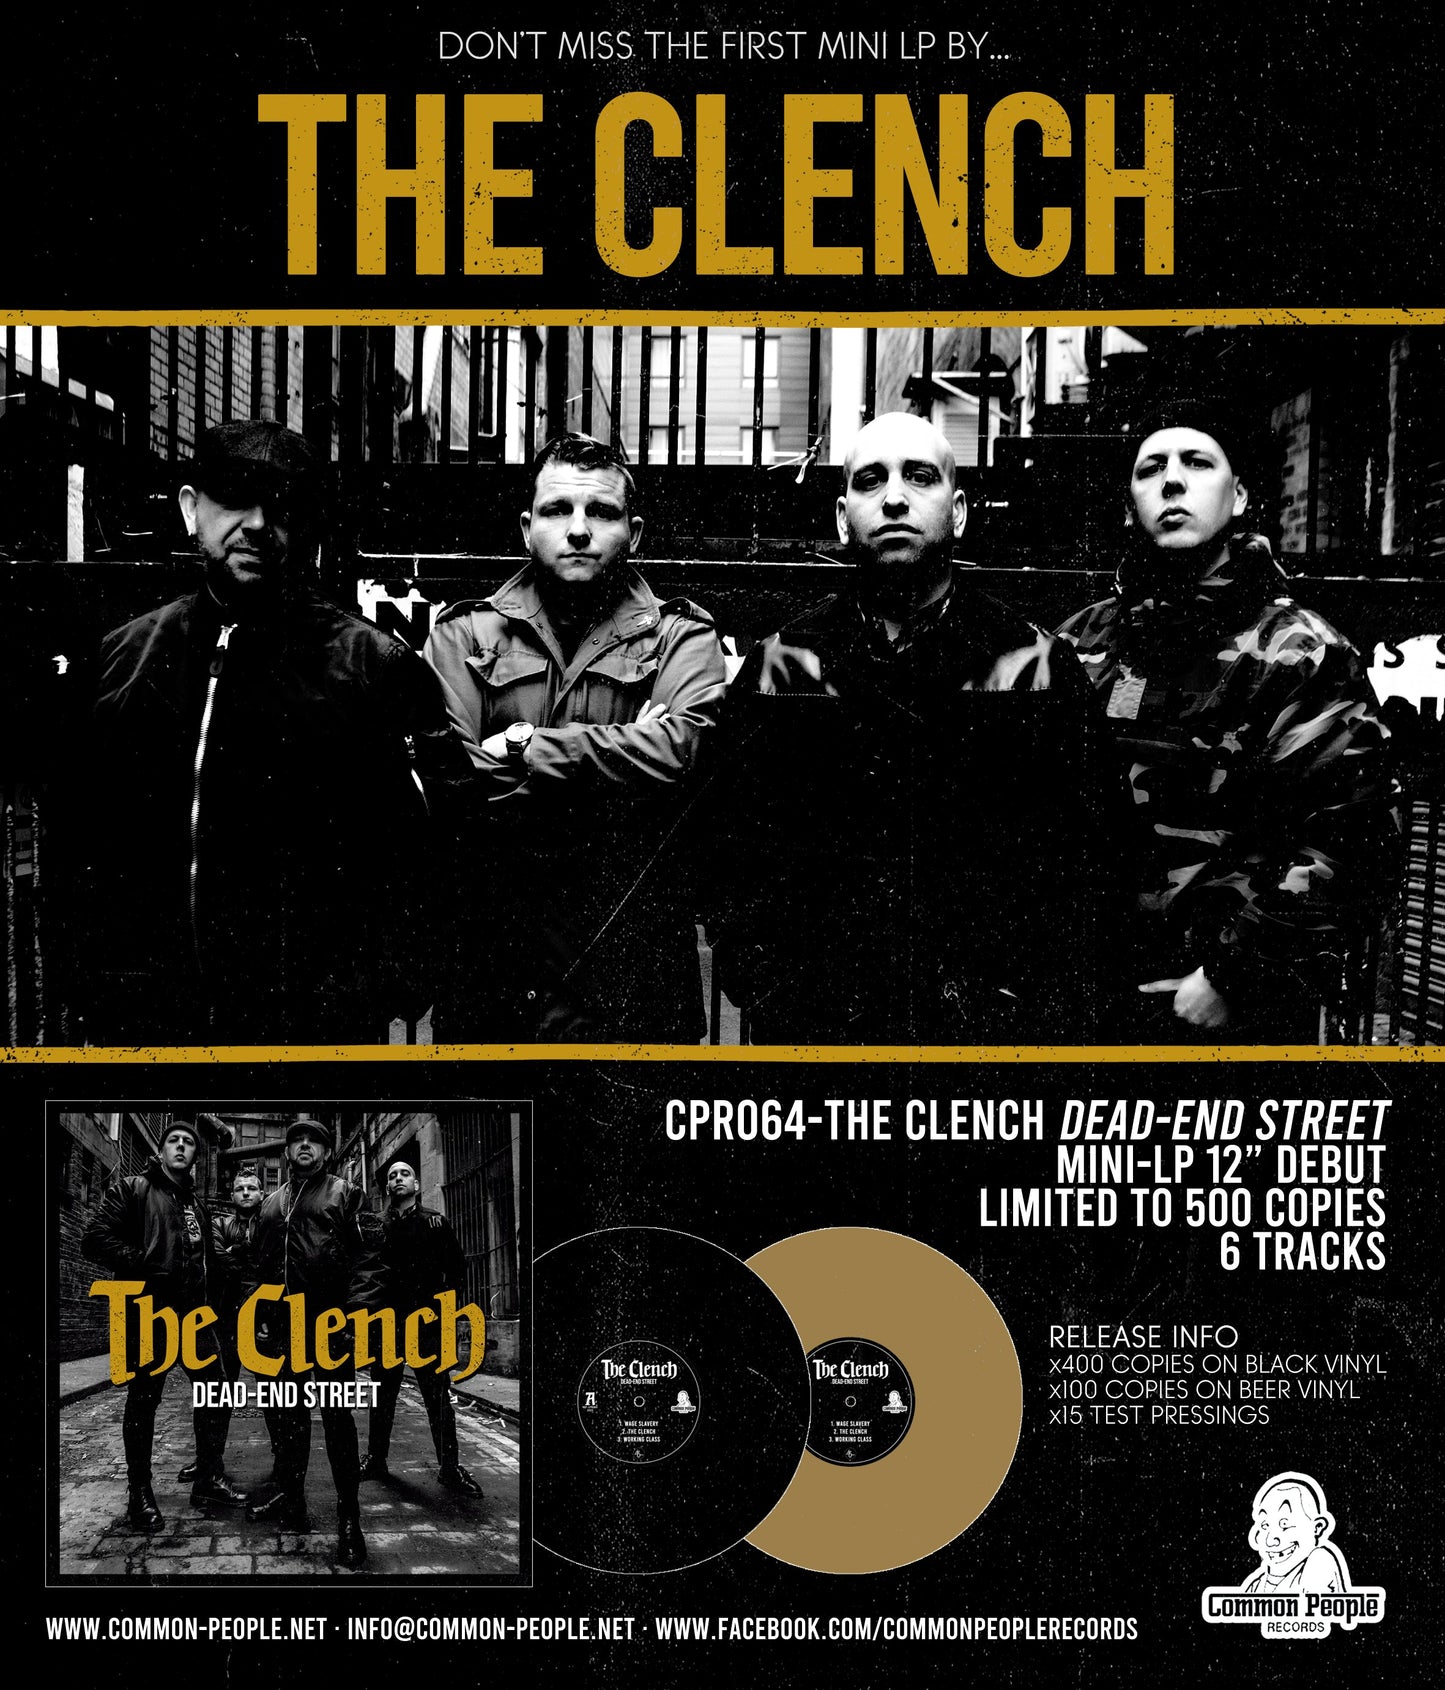 The Clench "Dead-End Street" MLP (Beer Vinyl)